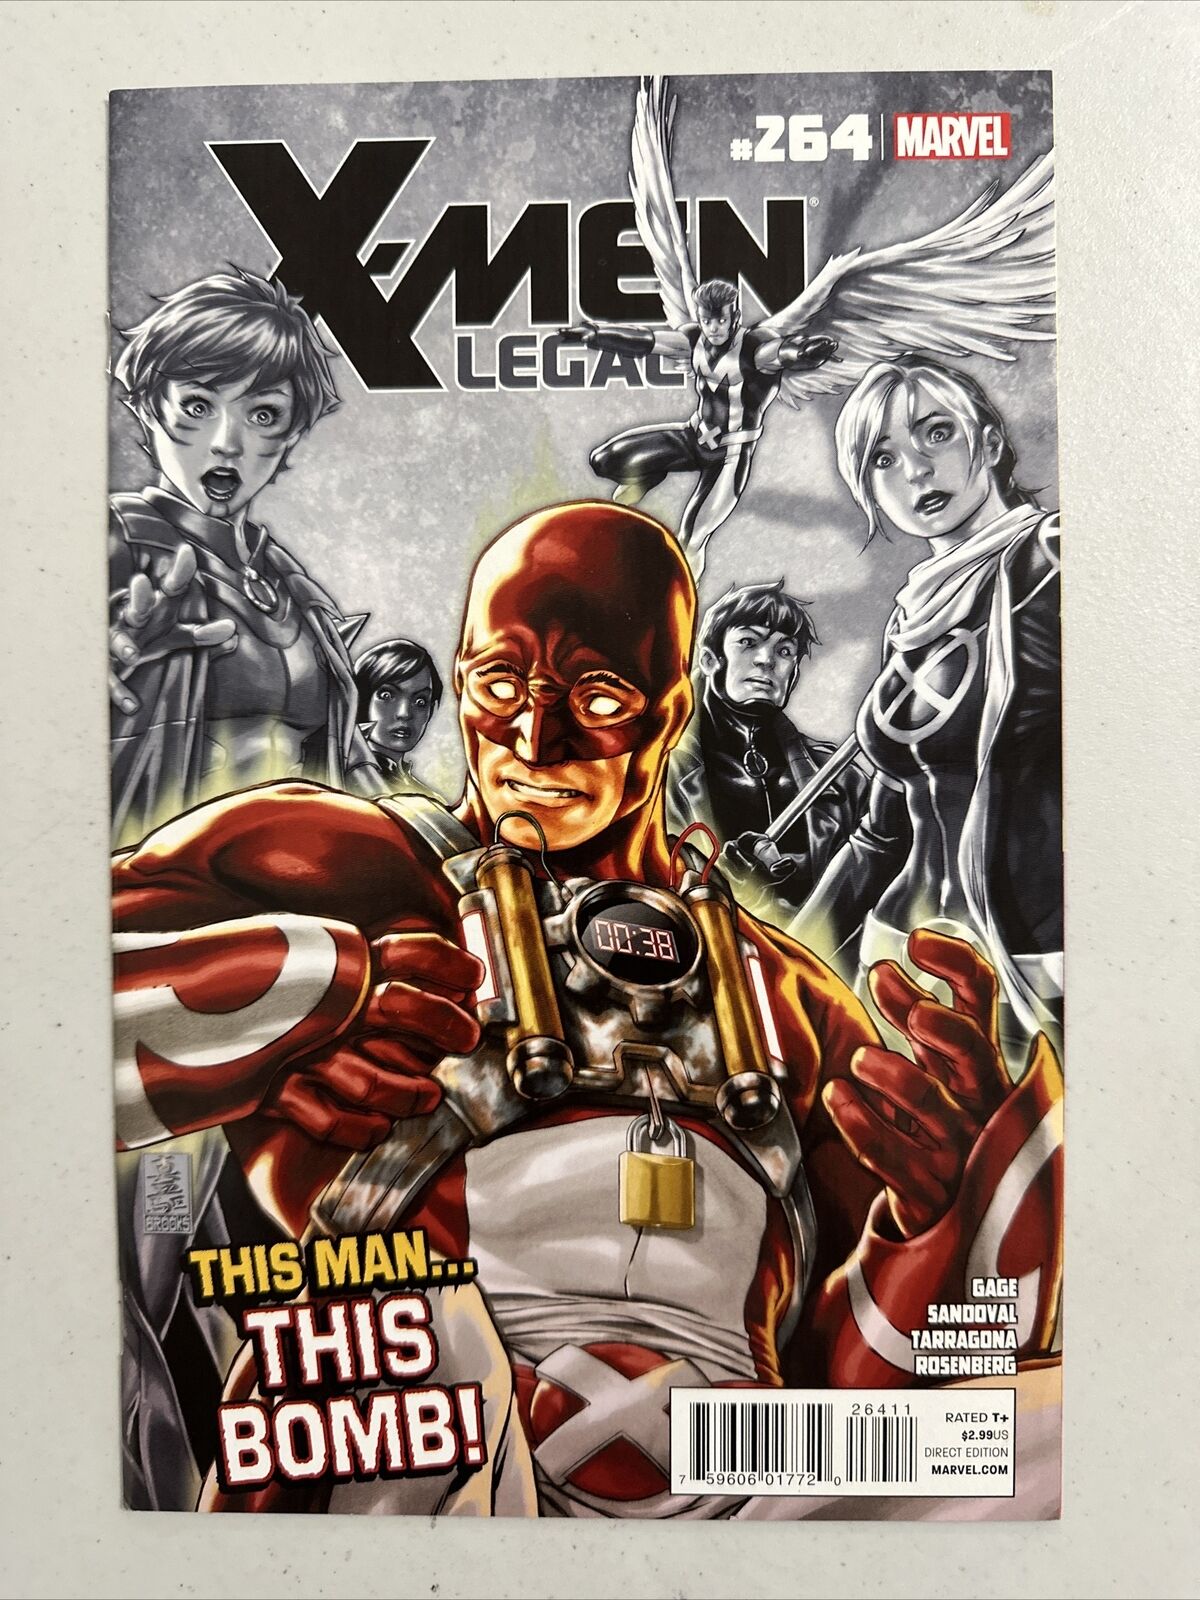 X-Men Legacy #264 Marvel Comics HIGH GRADE COMBINE S&H